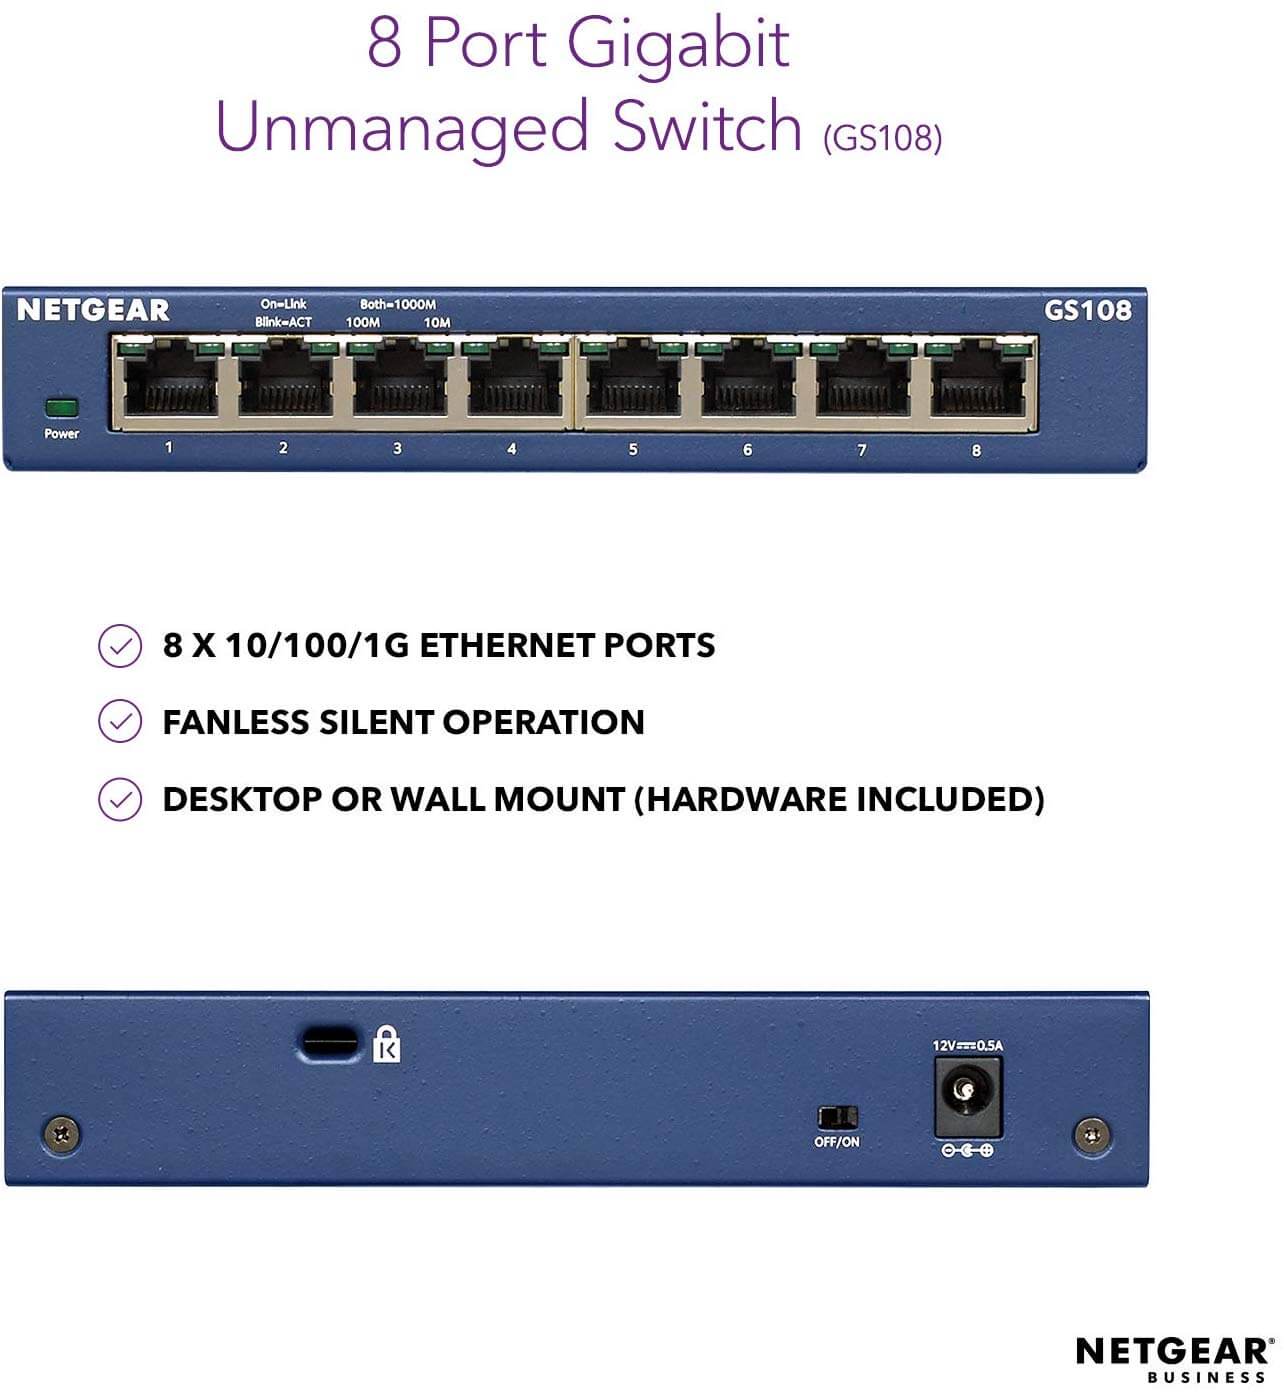  NETGEAR 8-Port Gigabit Ethernet Unmanaged Switch